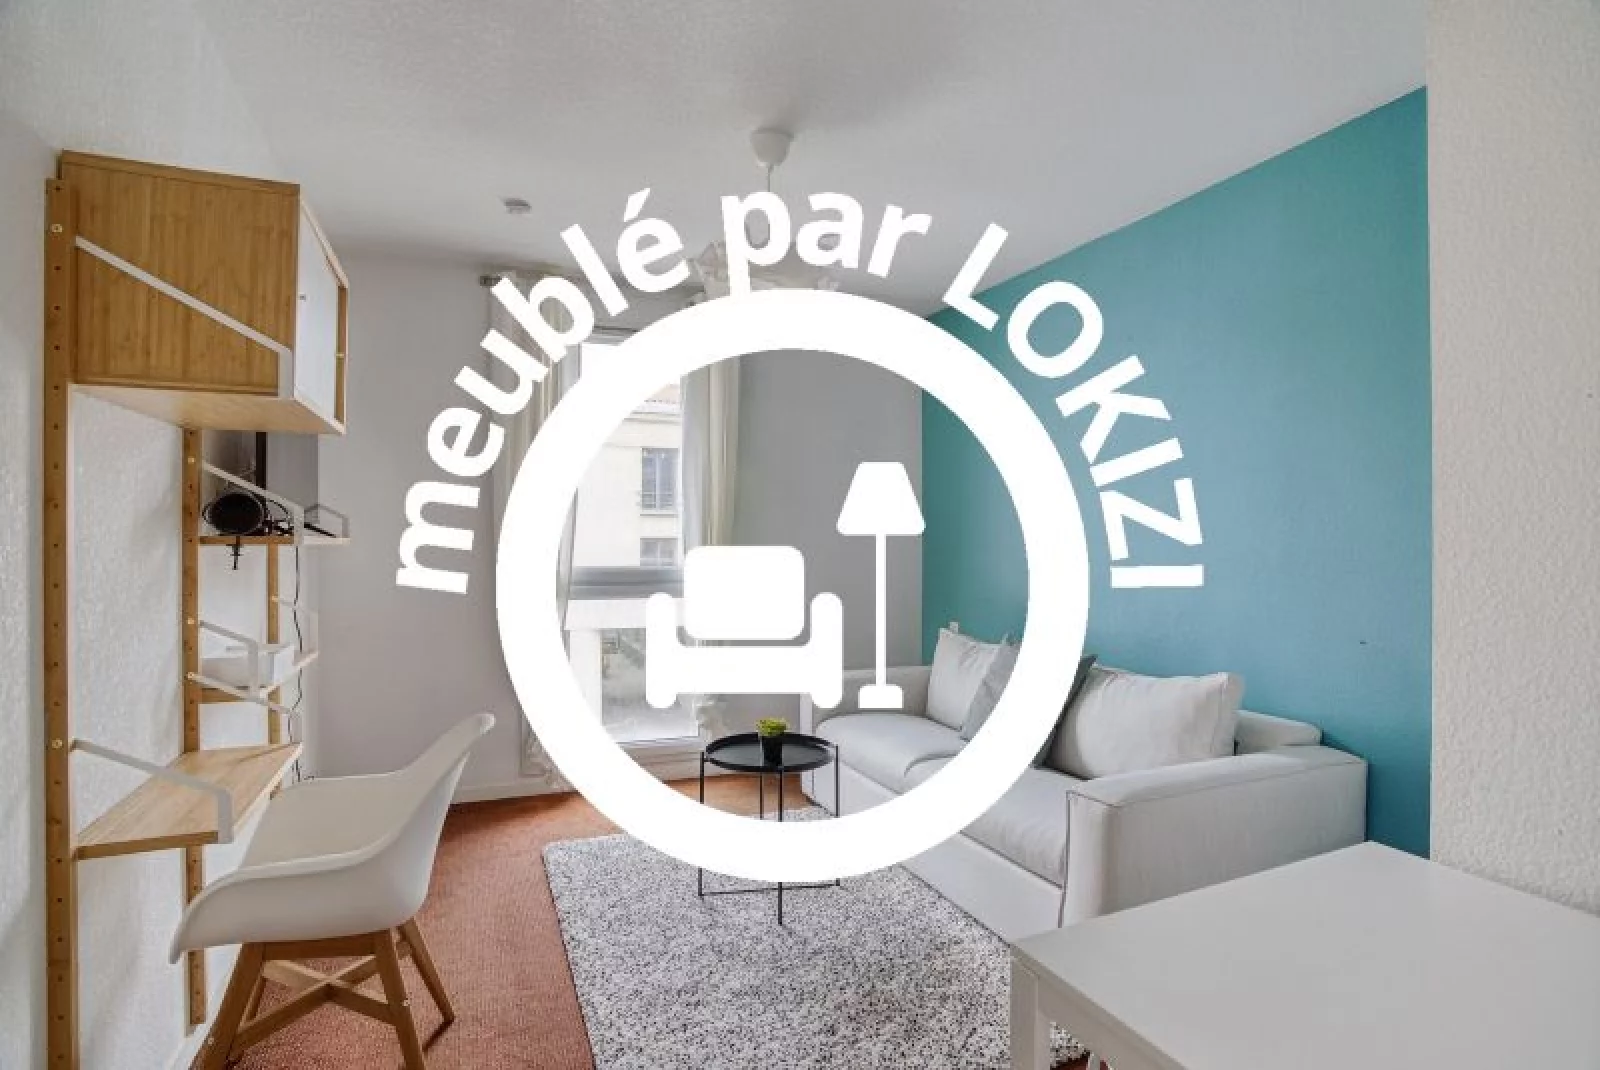 Location studio meublé de presque 20m² avec piscine (Poitiers)